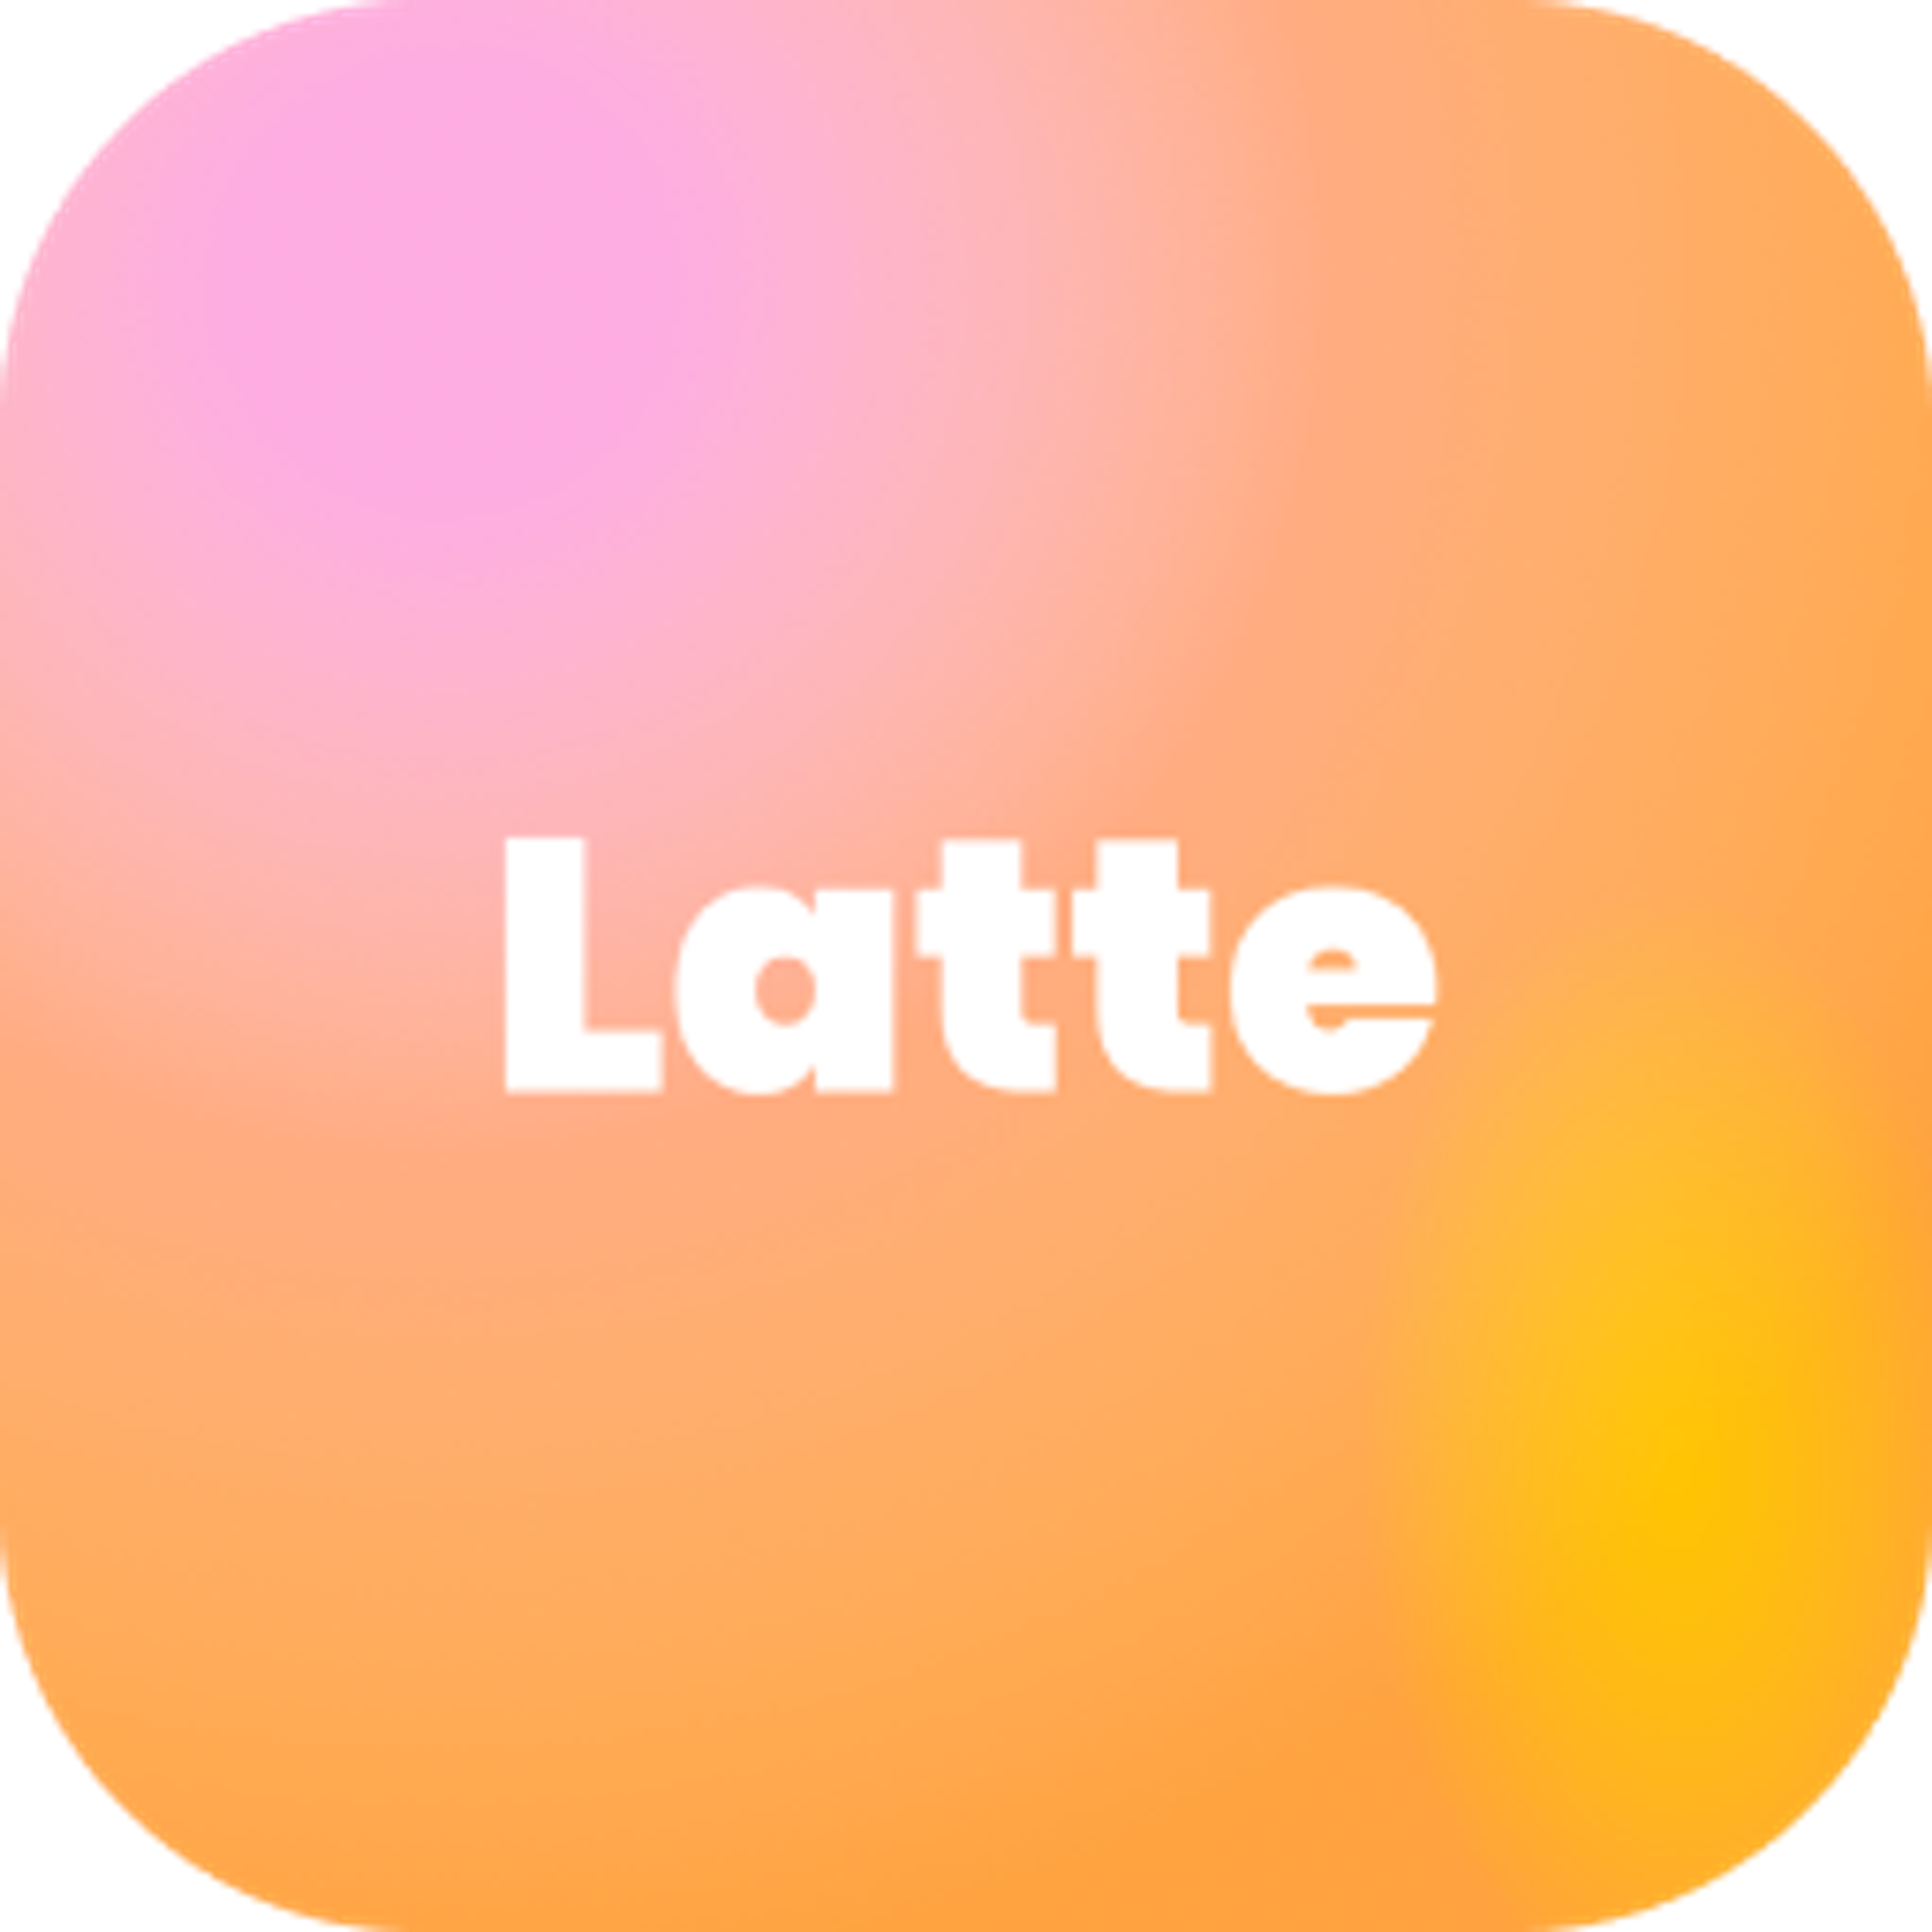 Latte Social - Create social first videos in a single click